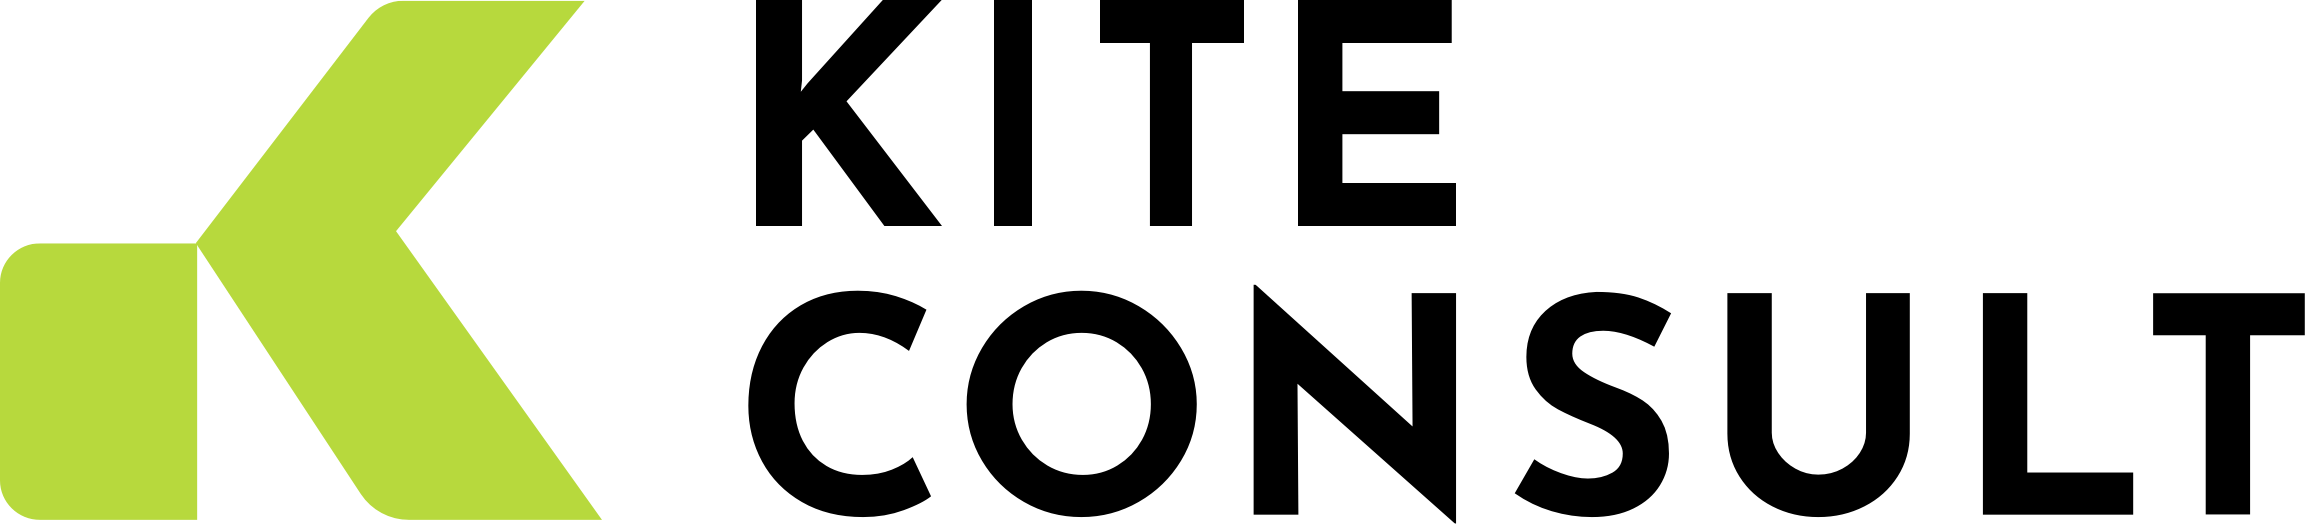 kite-consult-logo